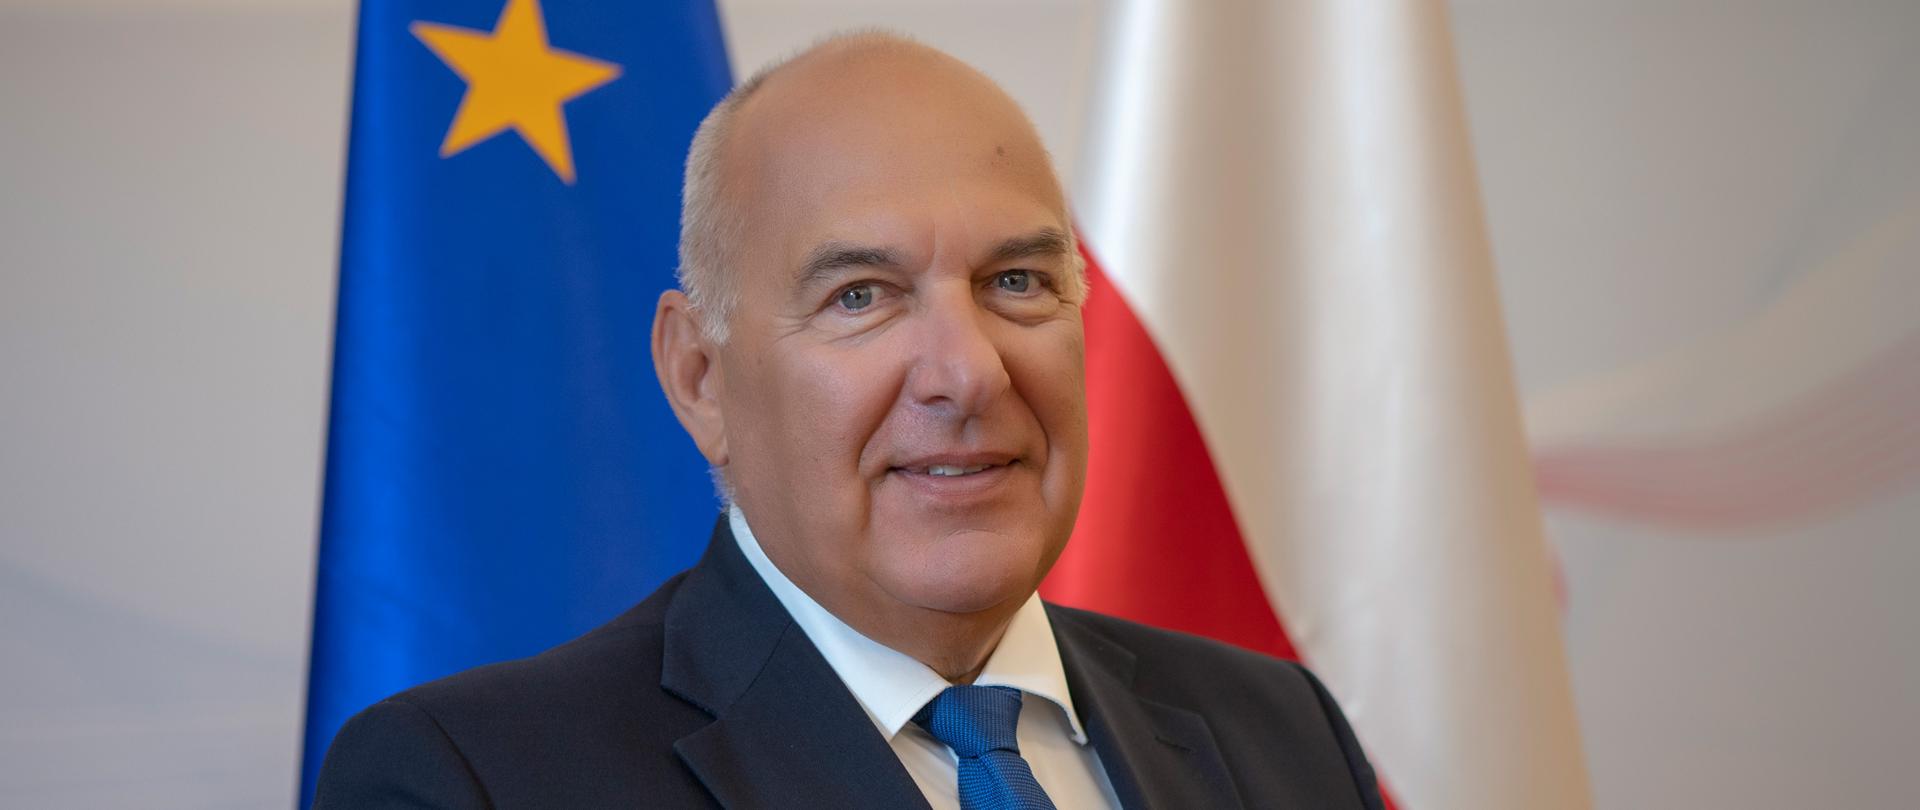 Minister T. Kościński